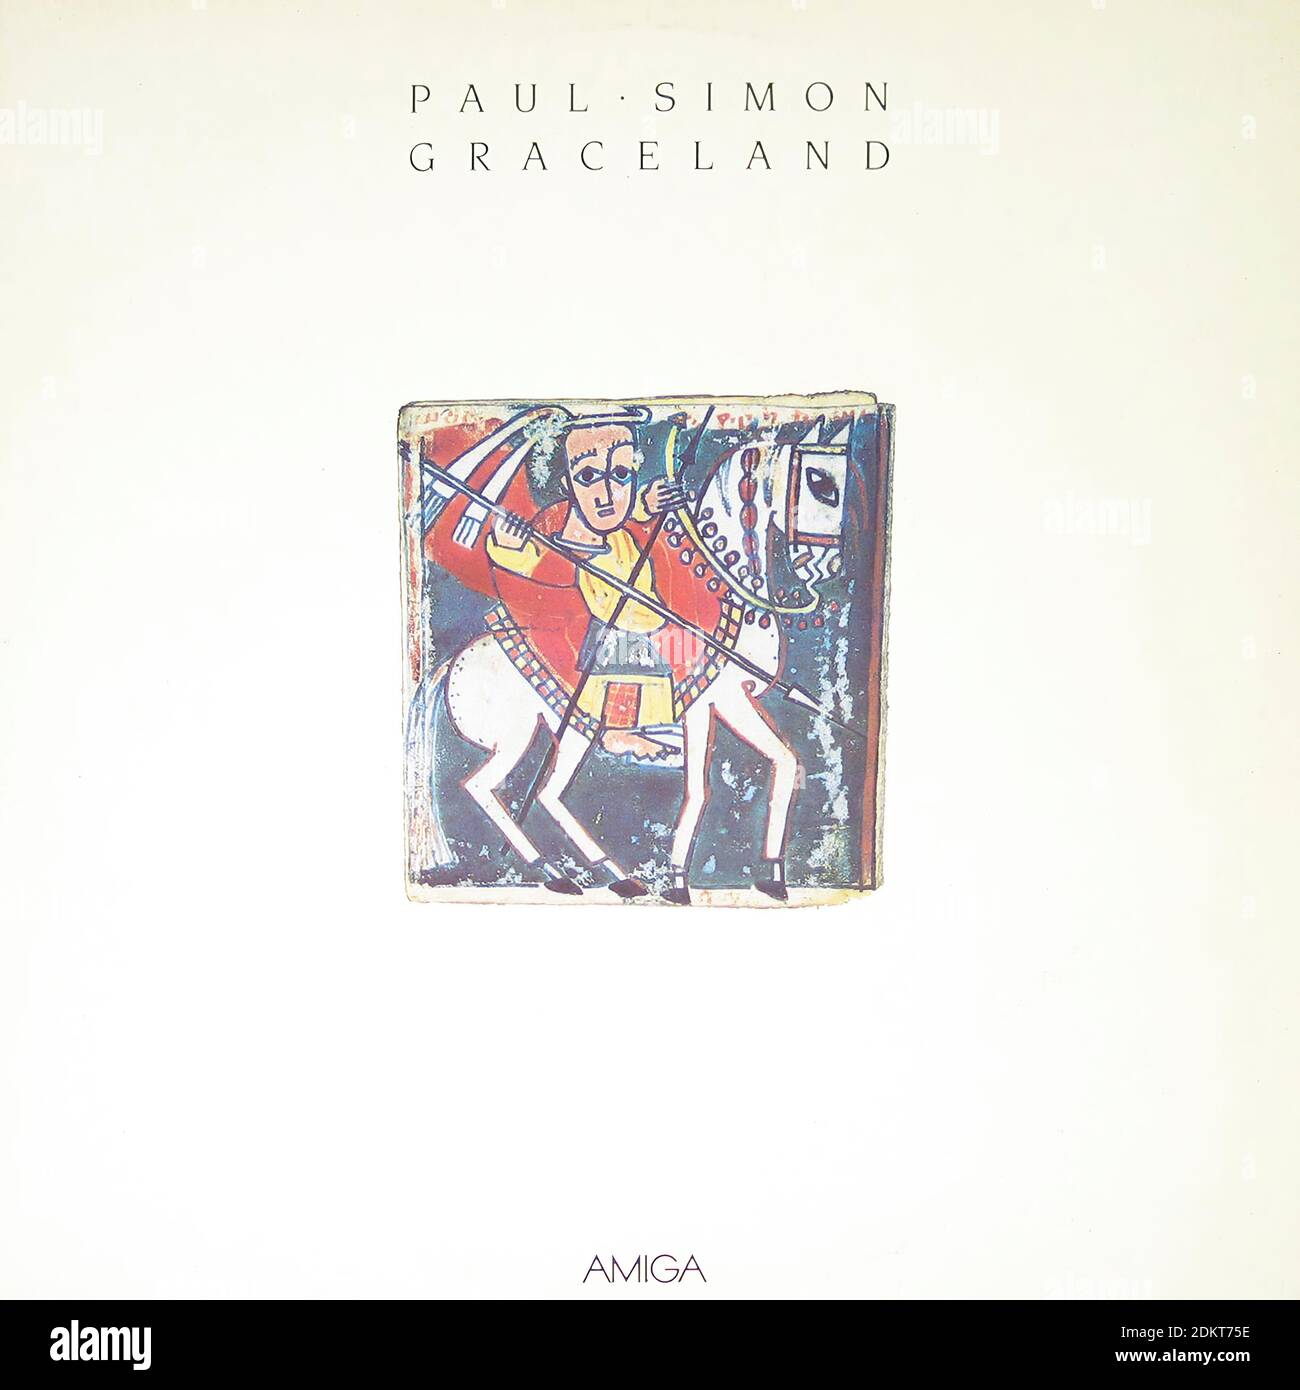 Paul Simon Graceland Amiga DDR  - Vintage Vinyl Record Cover Stock Photo